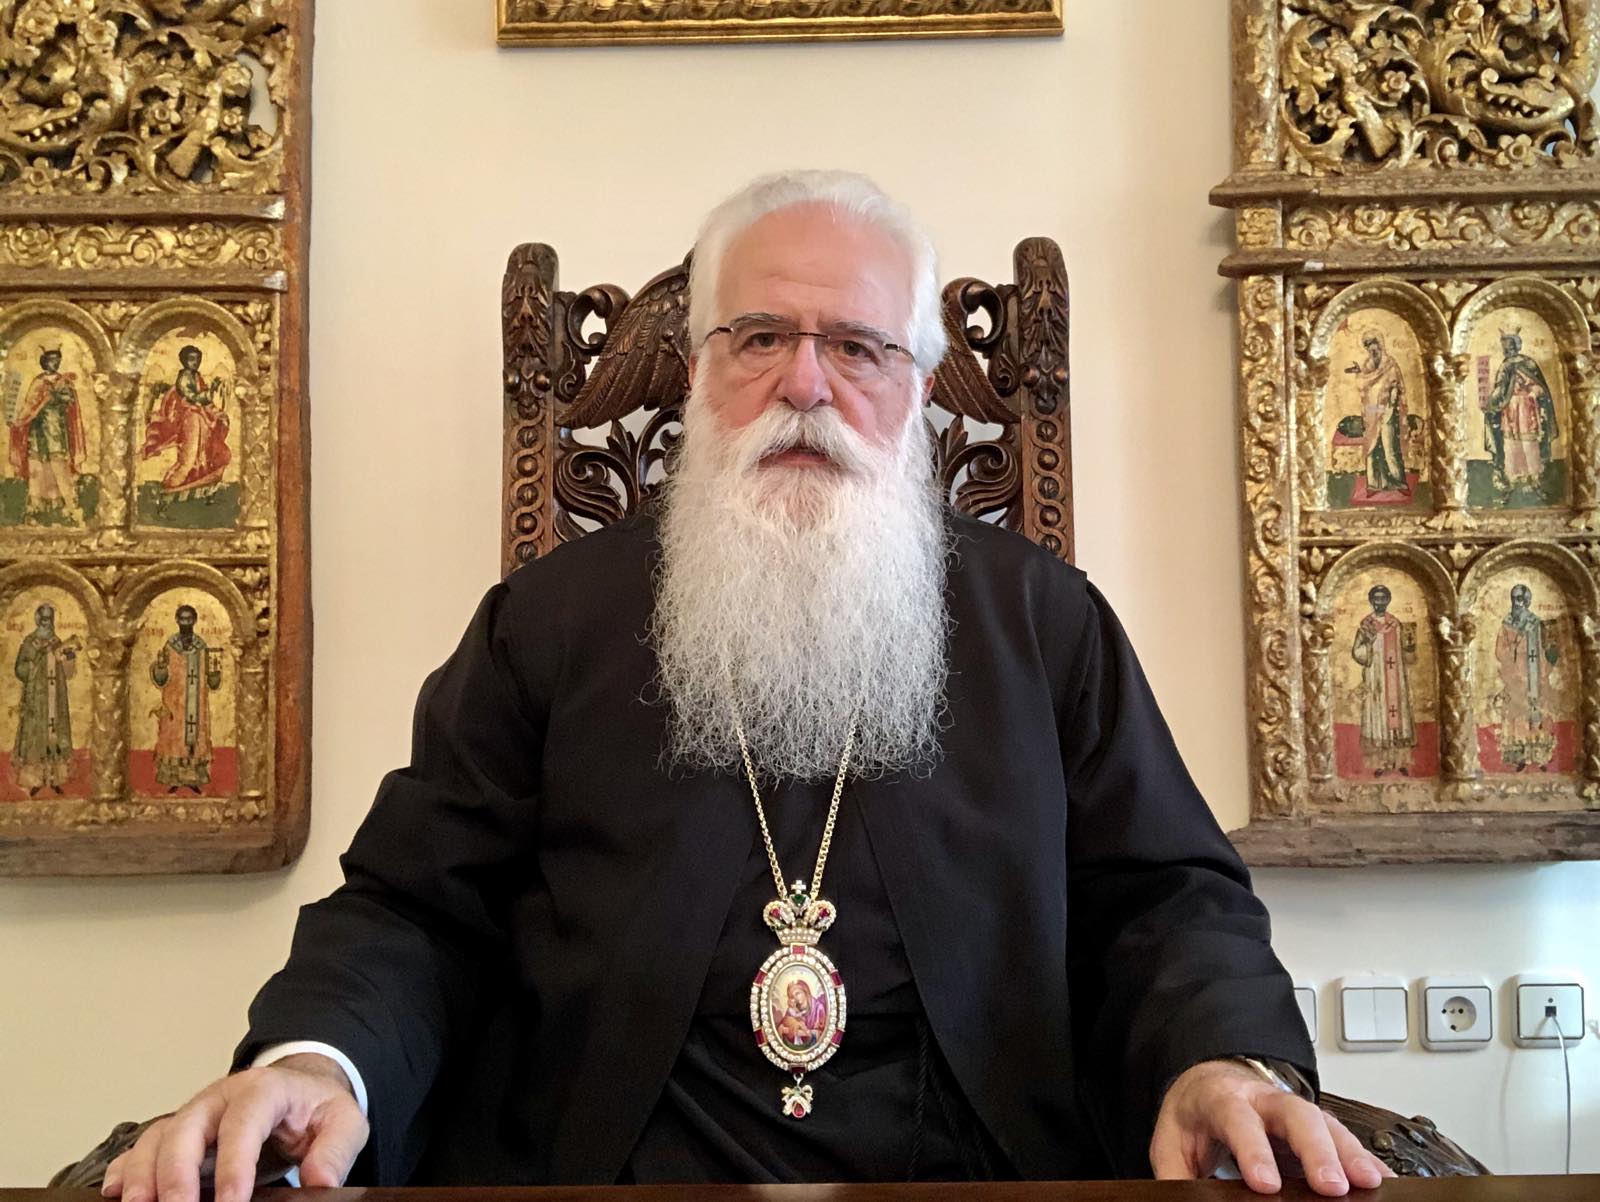 Metropolitan bishop of Dimitrias demands that his priests be vaccinated or have a weekly self-test